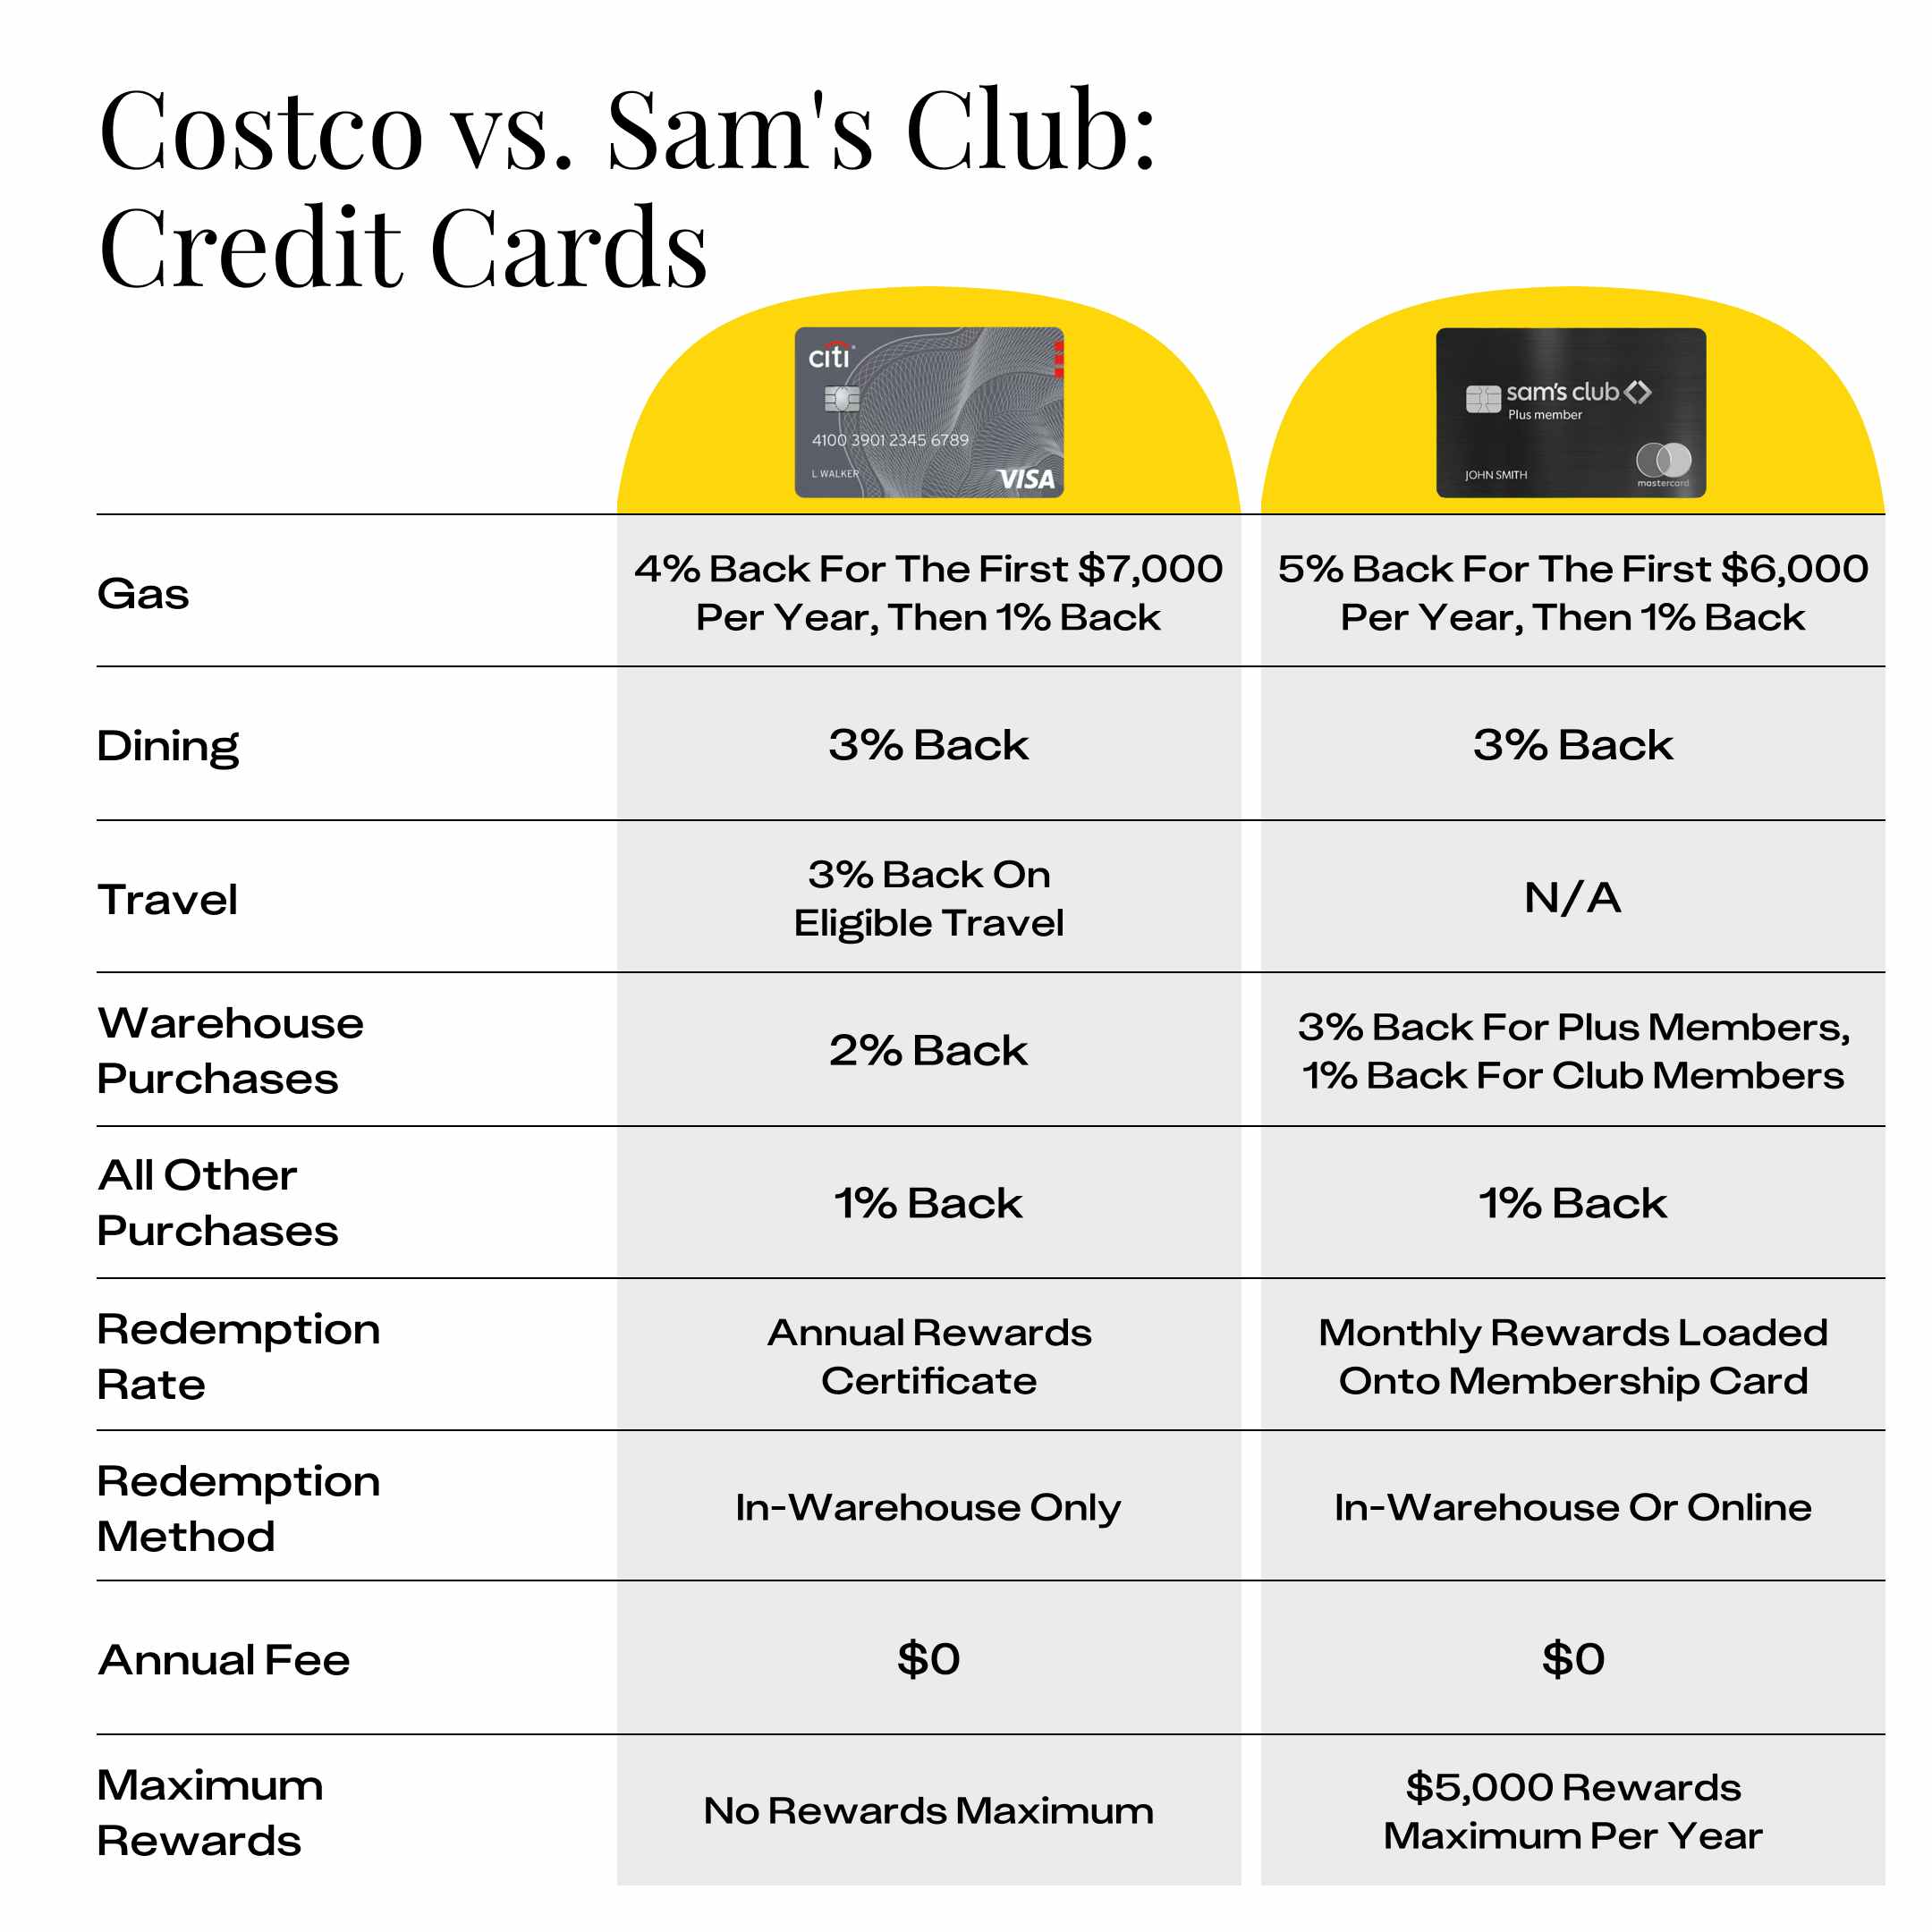 Costco vs. Sam's Club Credit Cards